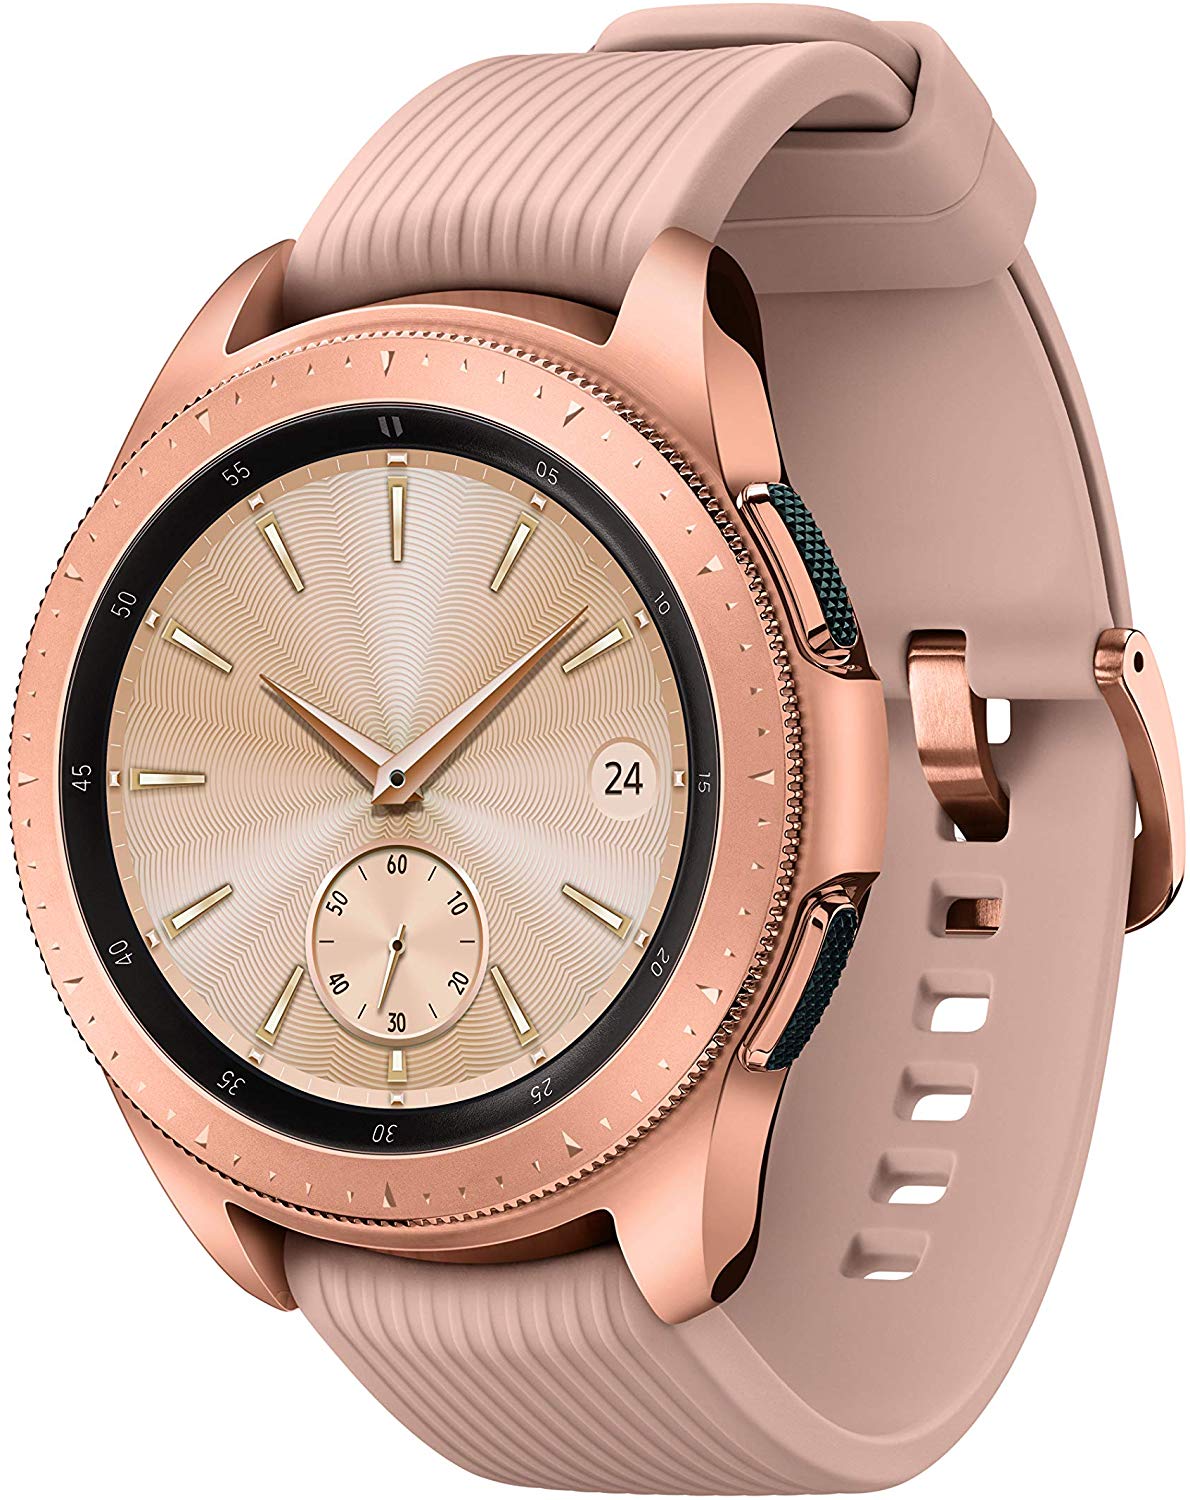 samsung galaxy watch price 46mm